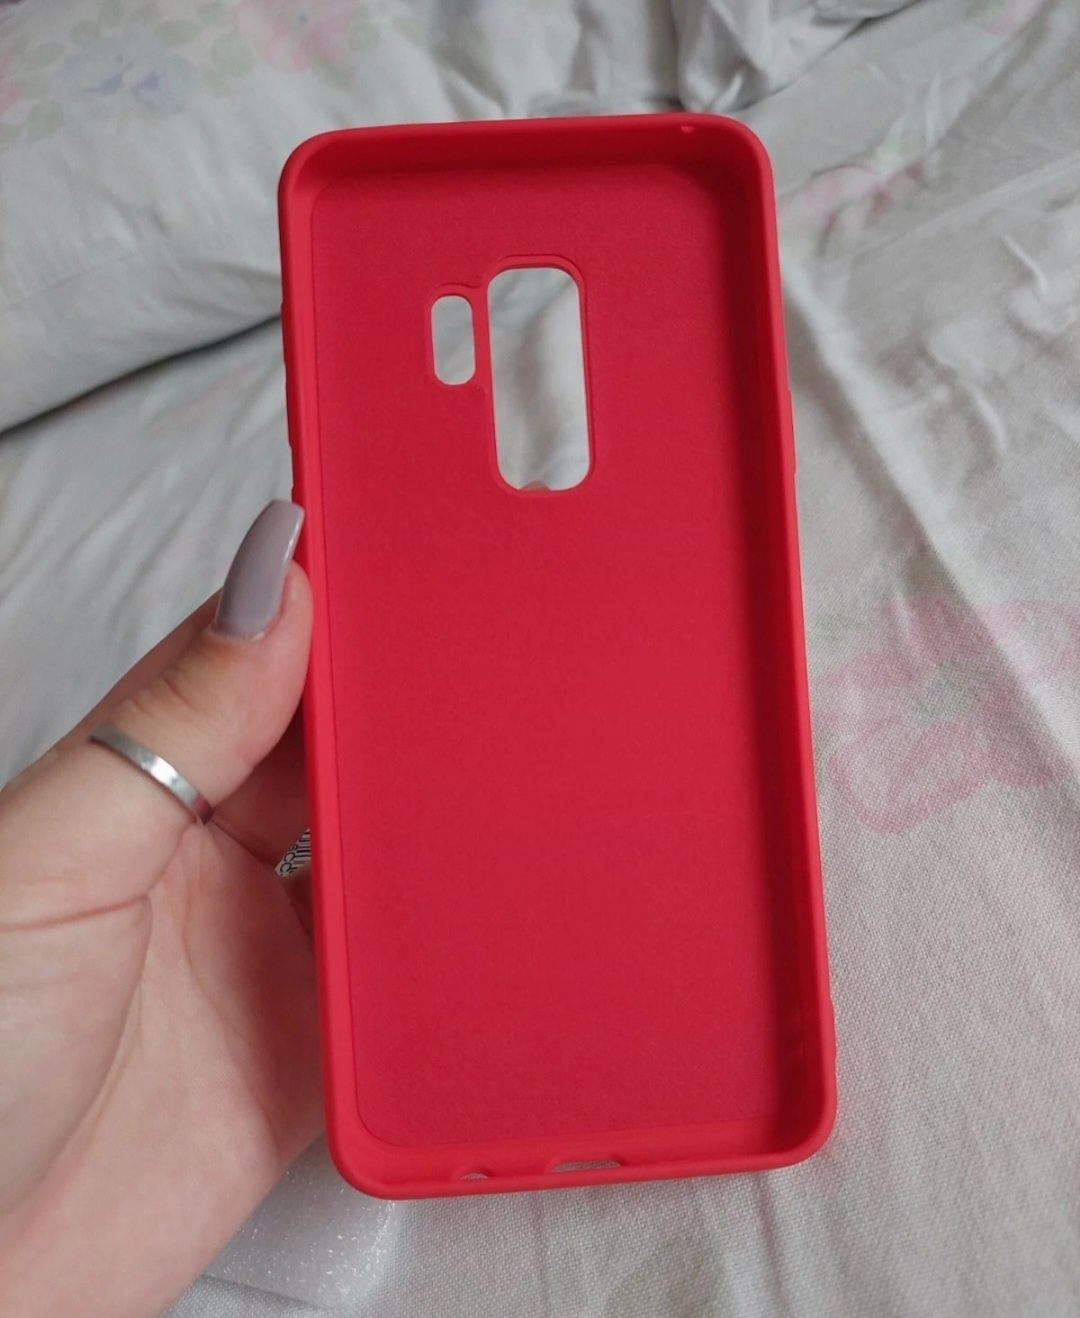 Capa para Samsung S9 Plus vermelha